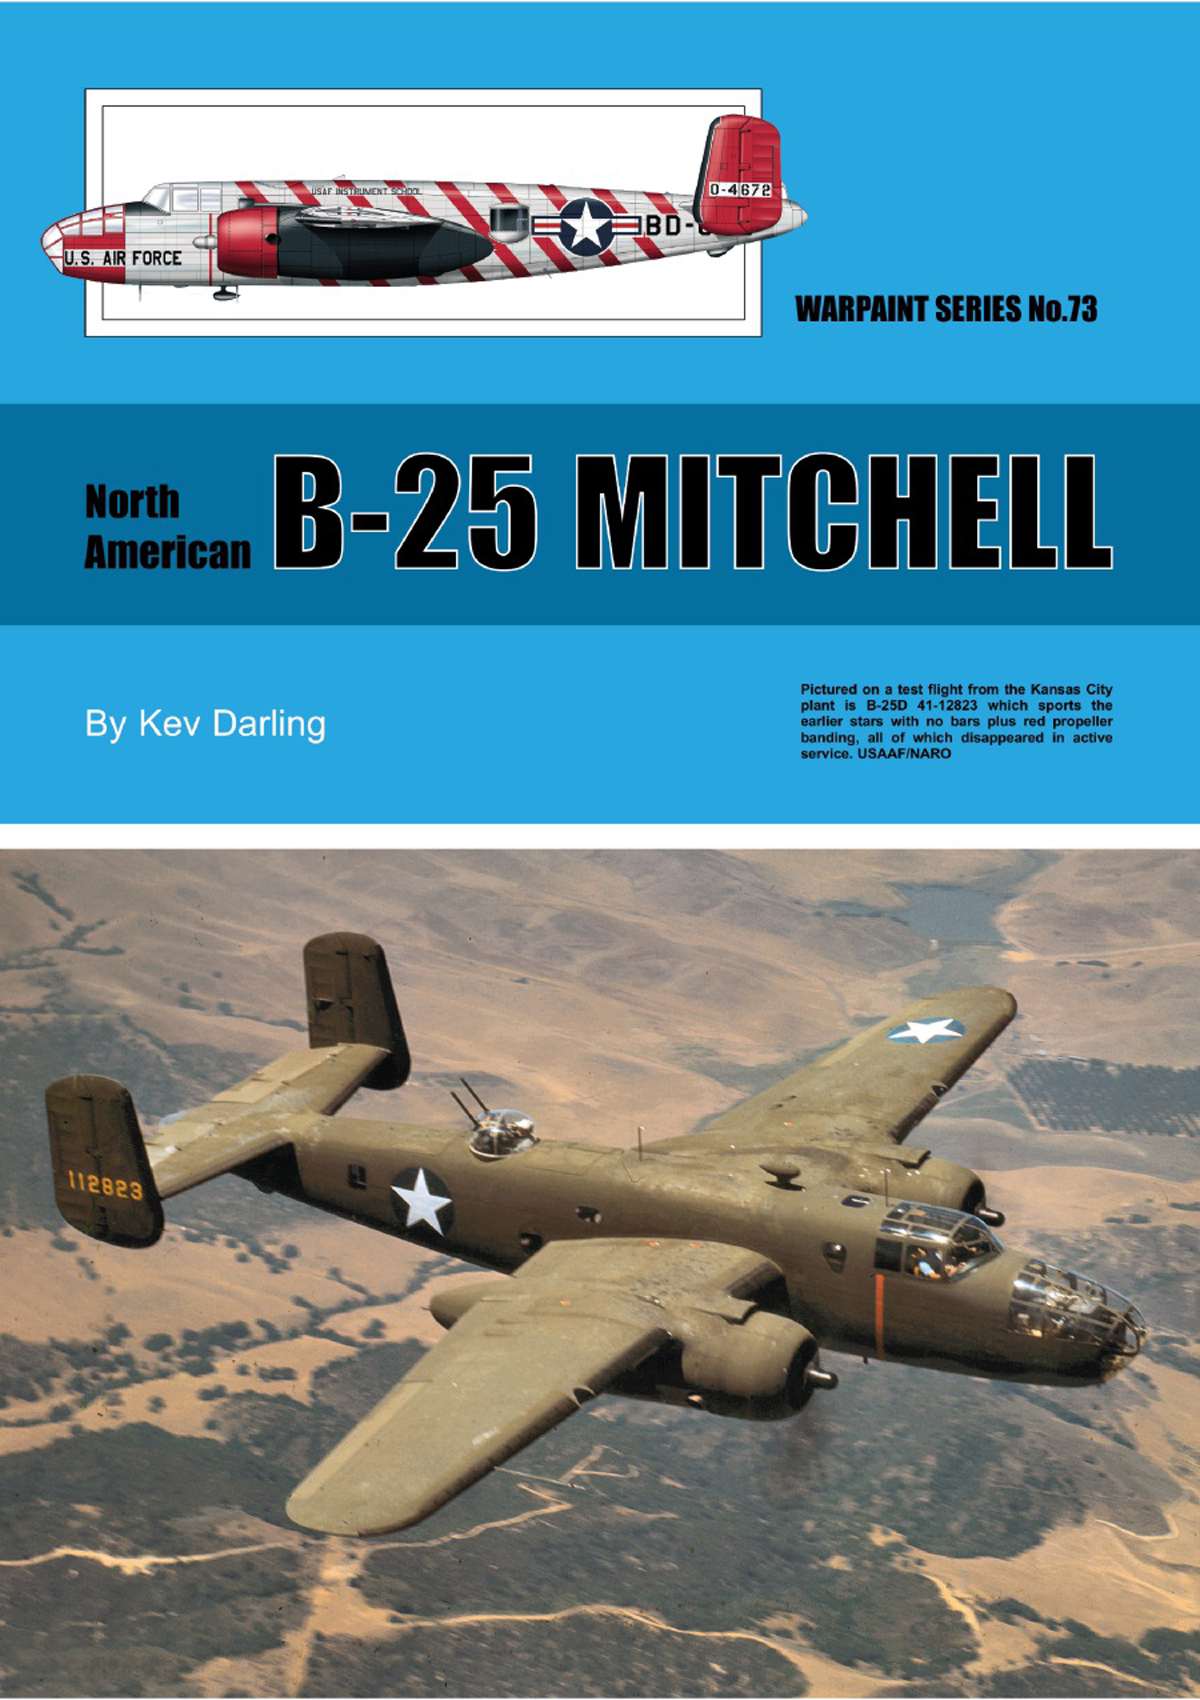 N73 - North American B-25 Mitchell